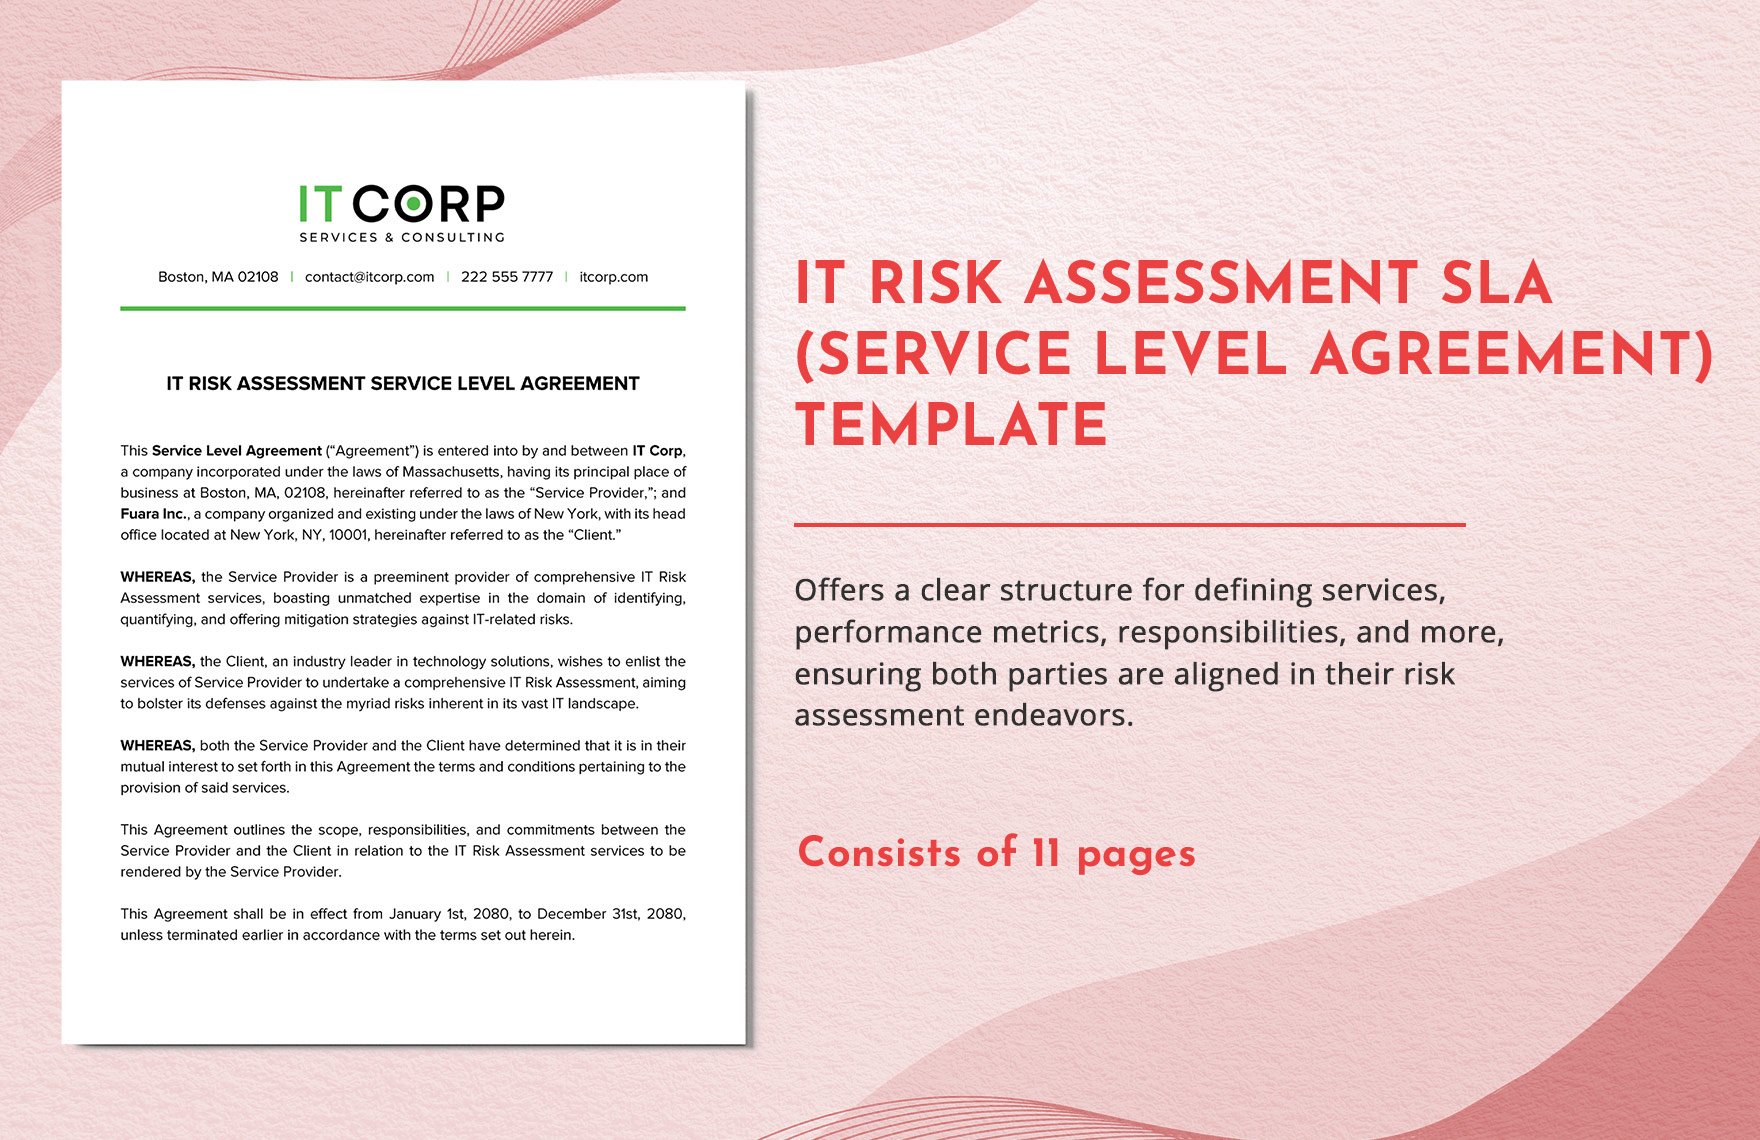 IT Risk Assessment SLA (Service Level Agreement) Template